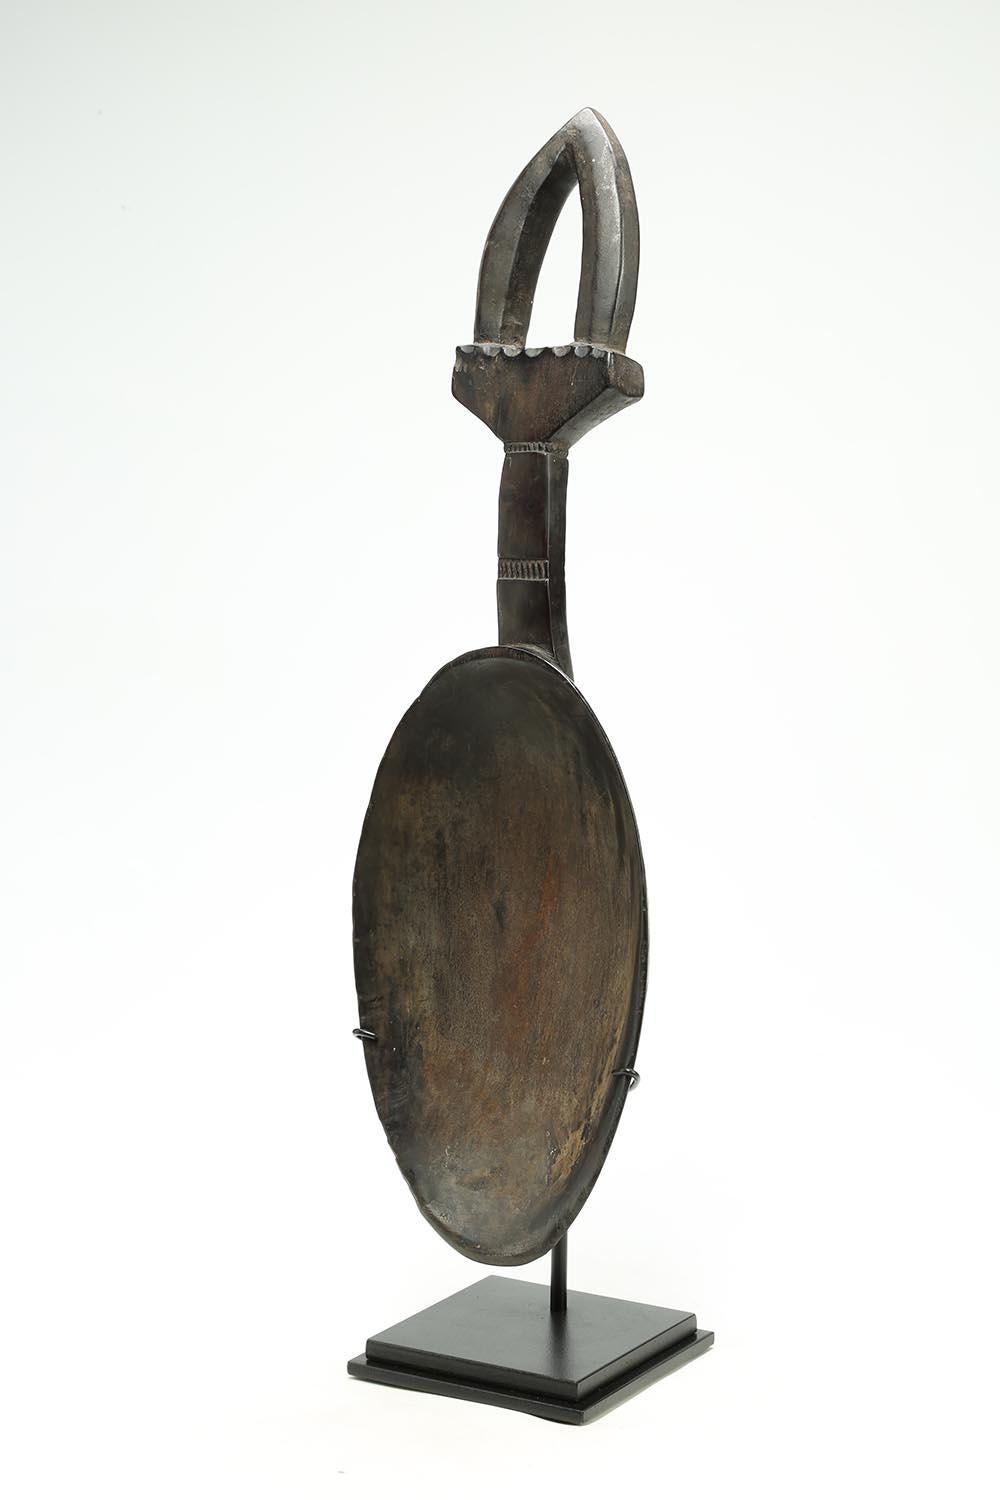 20th Century Dan Tribal Ritual Rice Serving Spoon, Stylized Antelope Handle, Incised Design